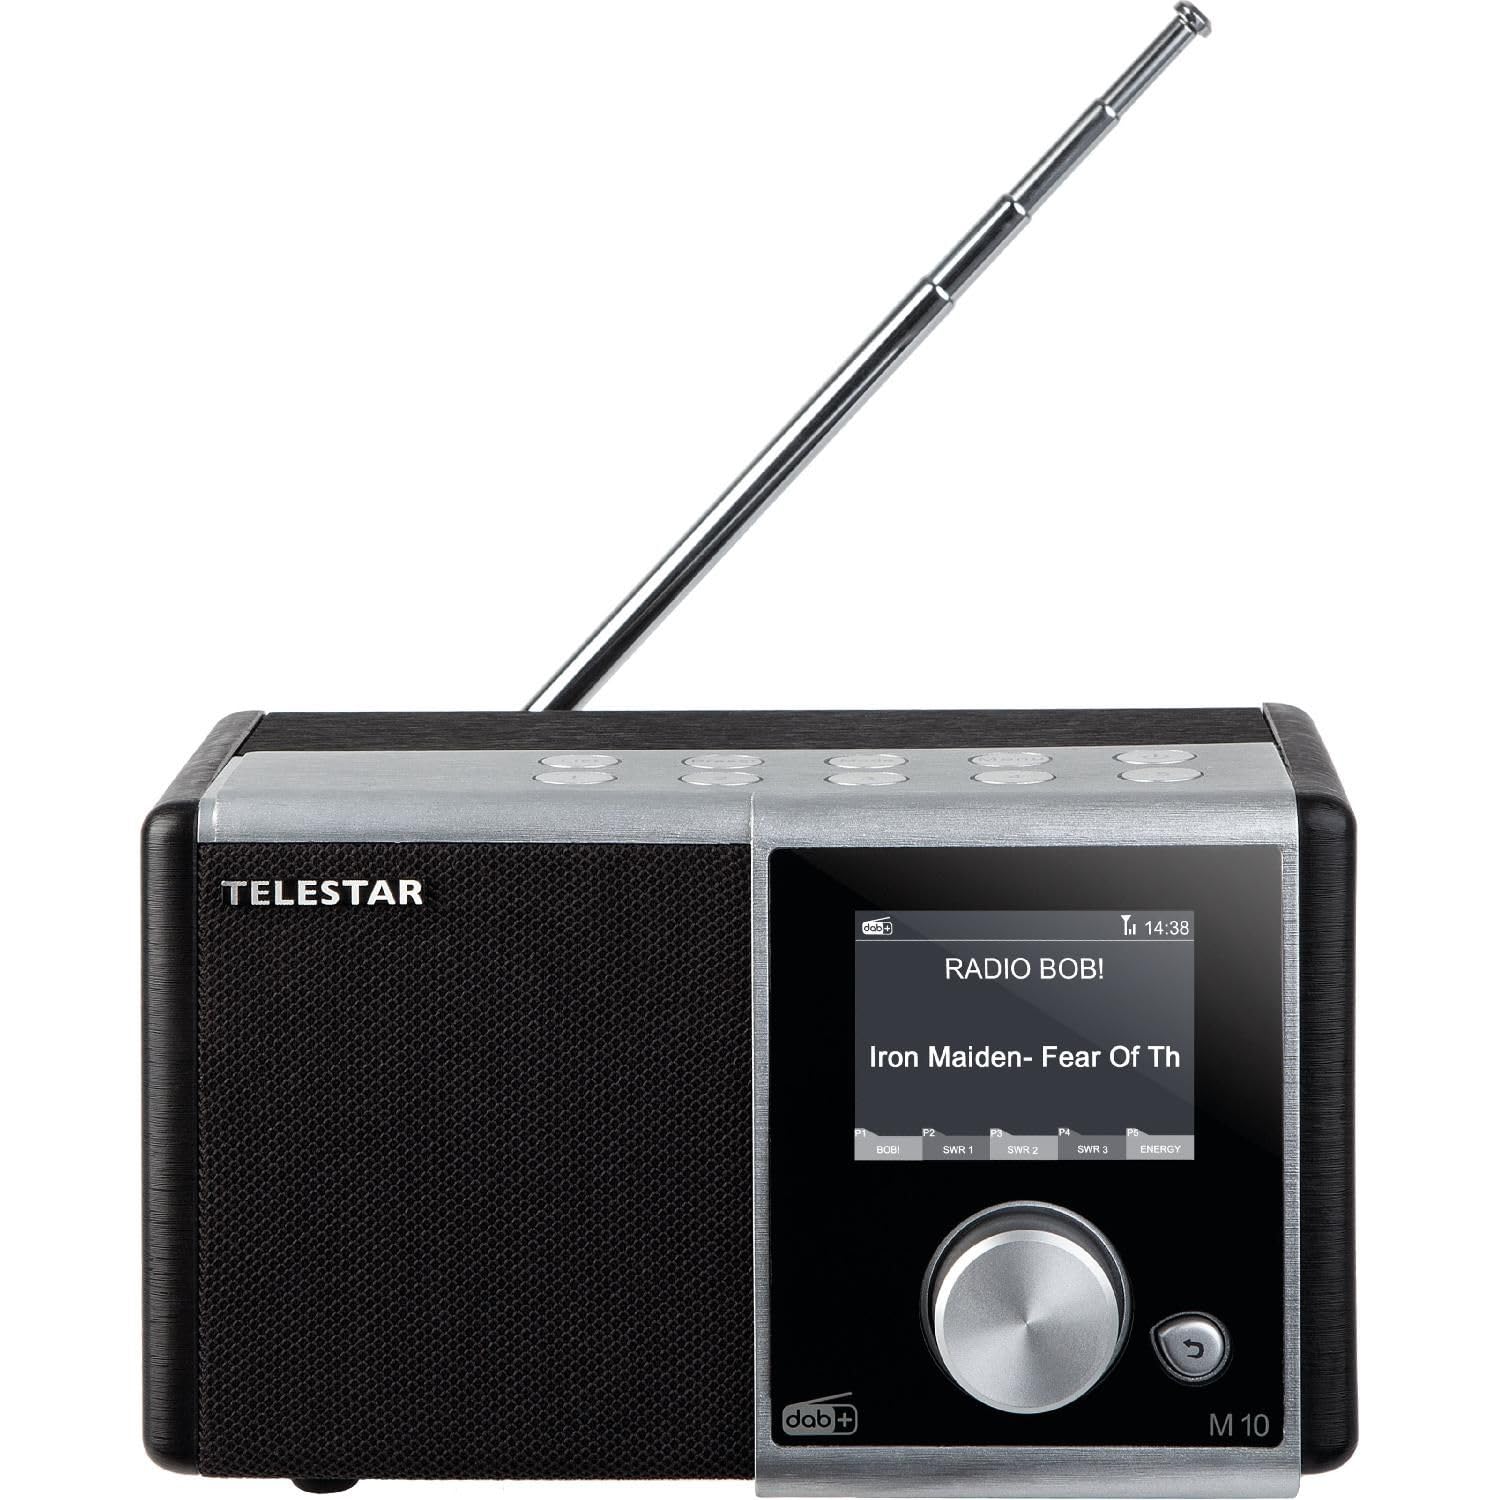 Telestar DIRA M 10 Digitalradio DAB+/UKW Empfang USB Speichertasten